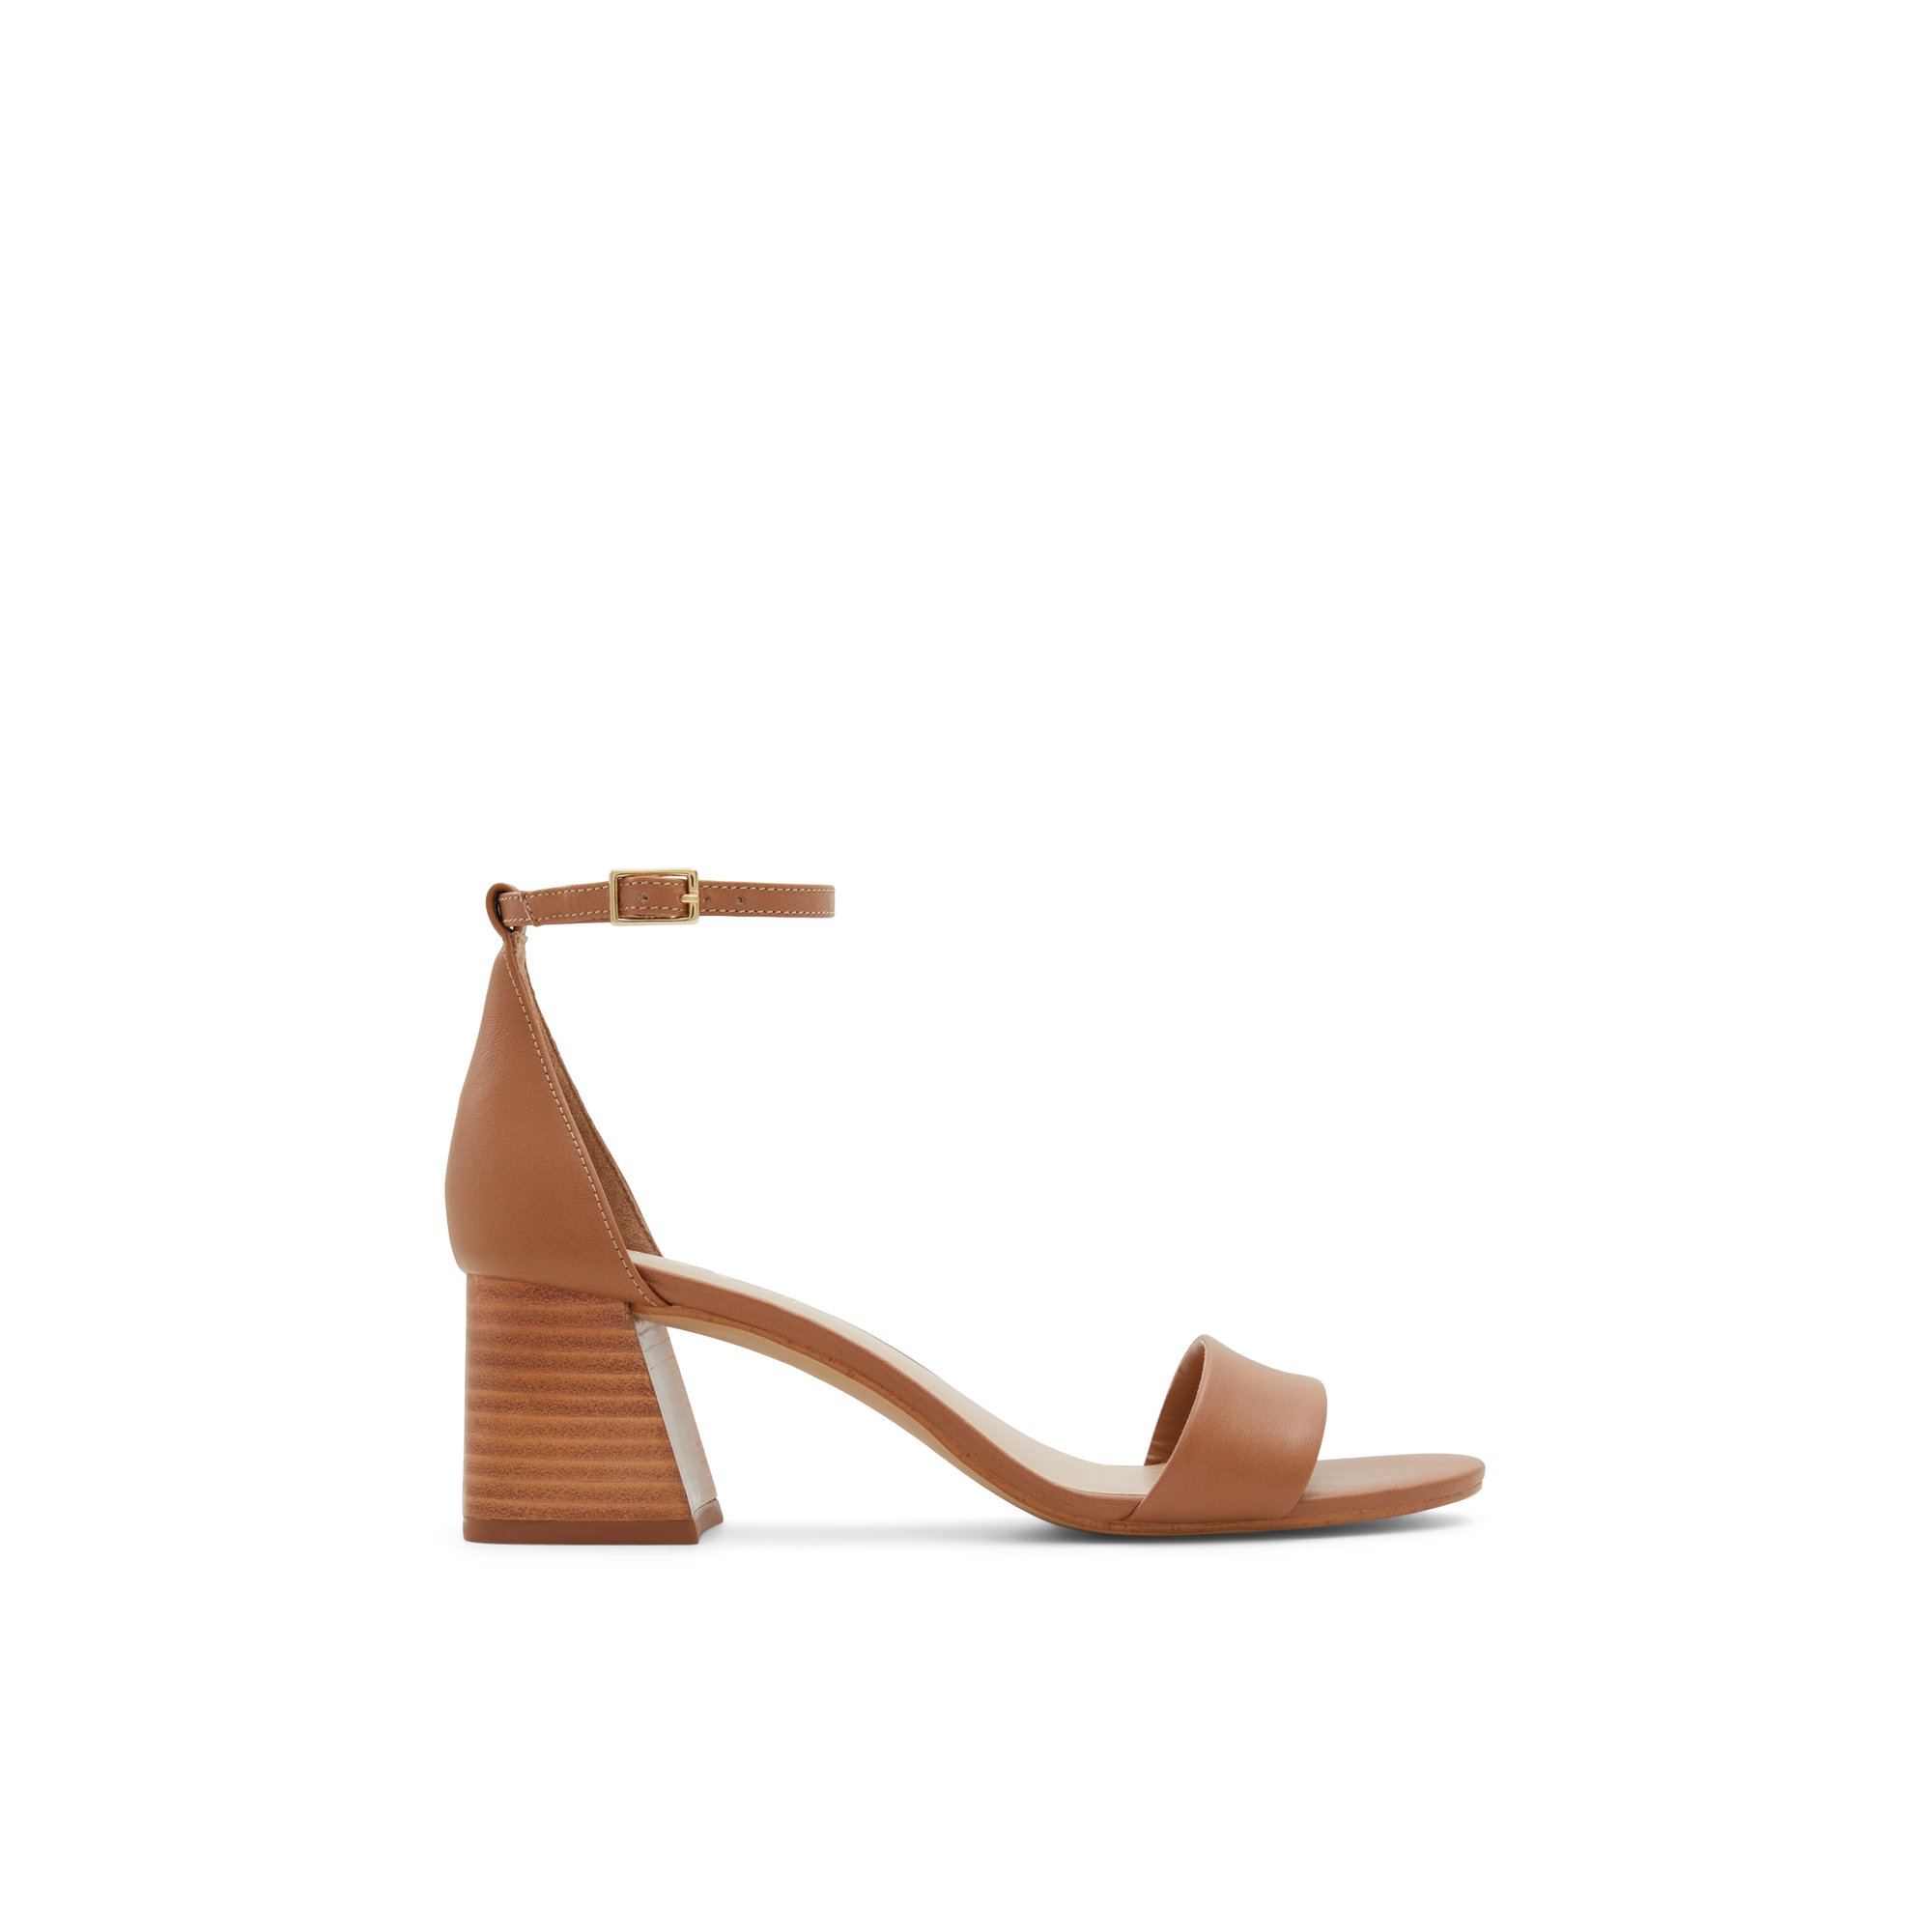 ALDO Formigoni - Women's Sandal - Brown